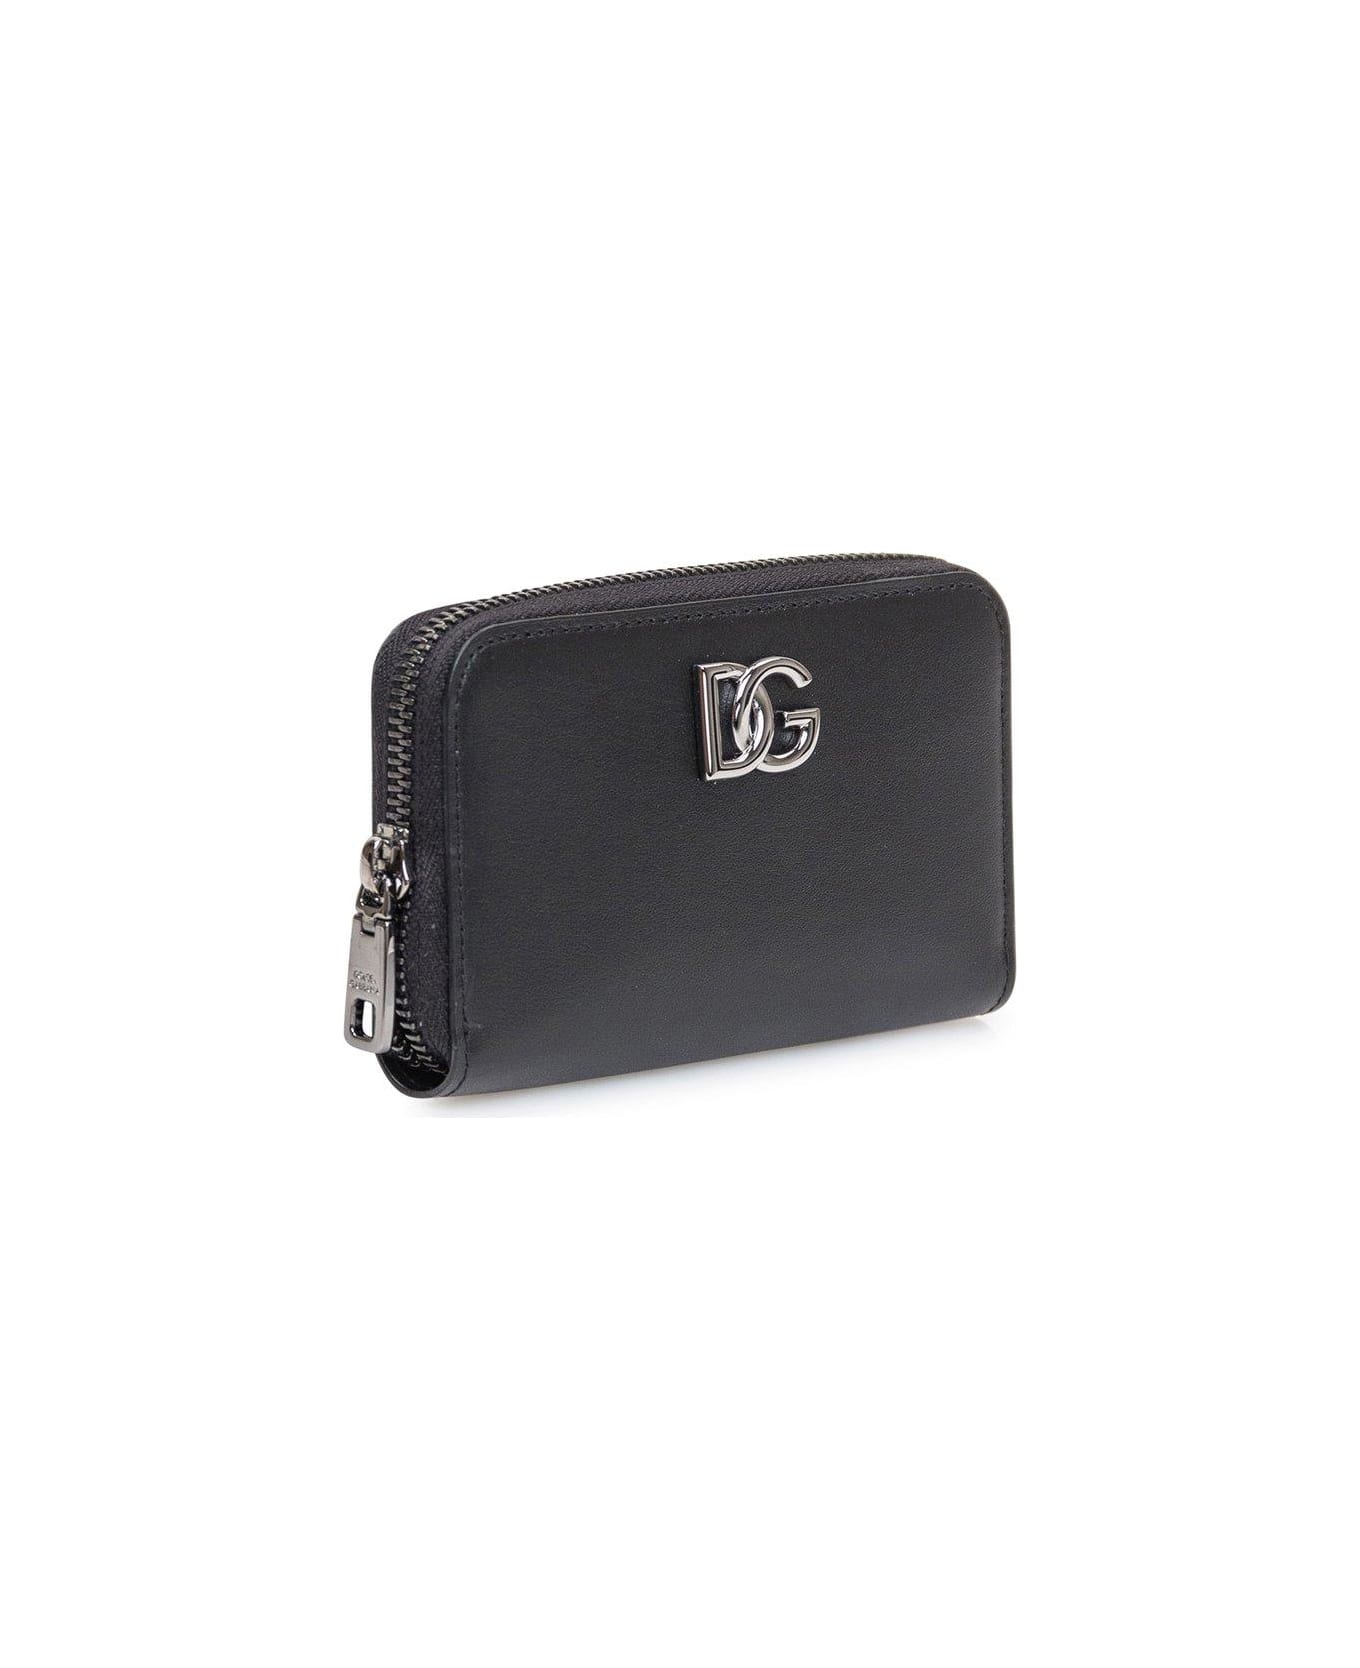 Dolce & Gabbana Logo Plaque Zipped Compact Wallet